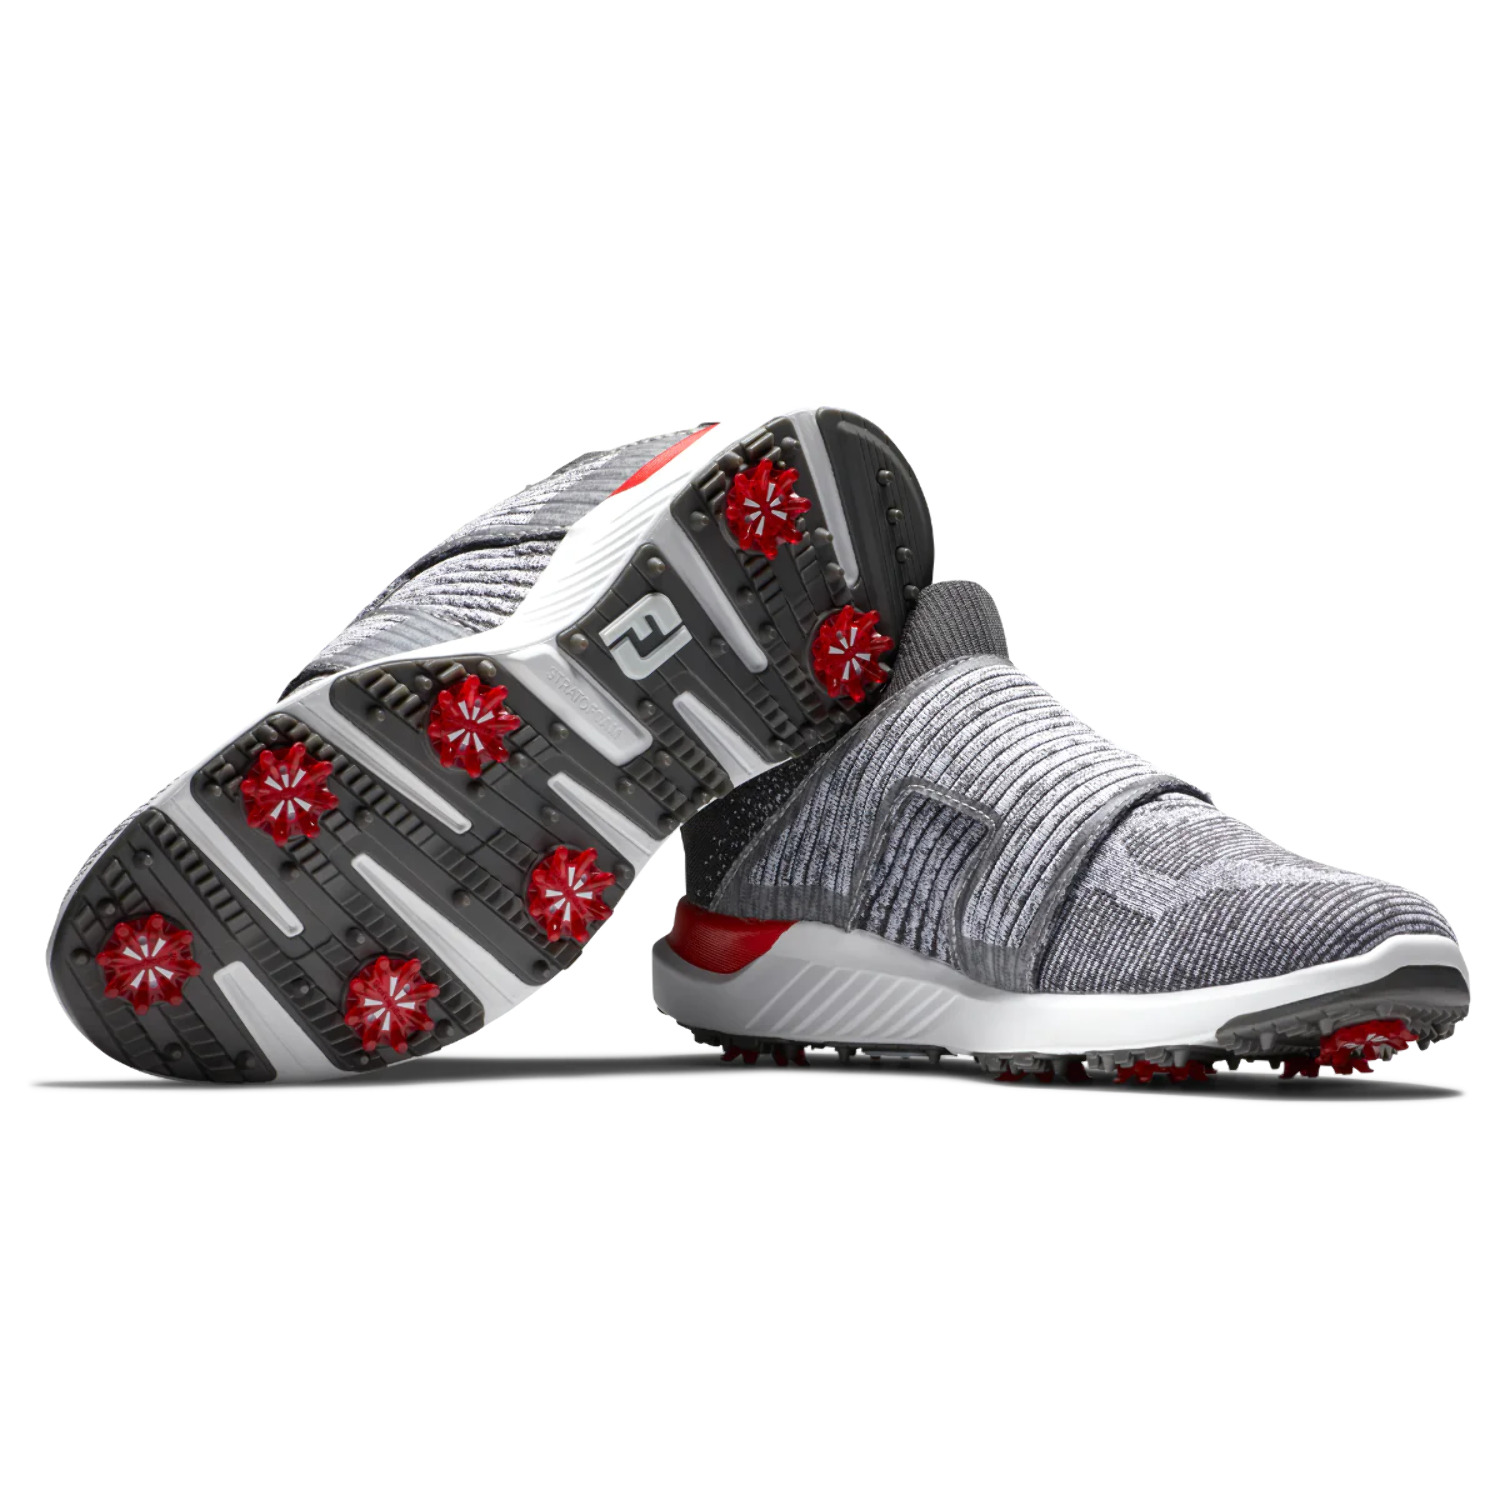 FootJoy Men's Hyperflex BOA Golf Shoes 51083 - Charcoal/Gray/White - 15 - Medium - image 4 of 11